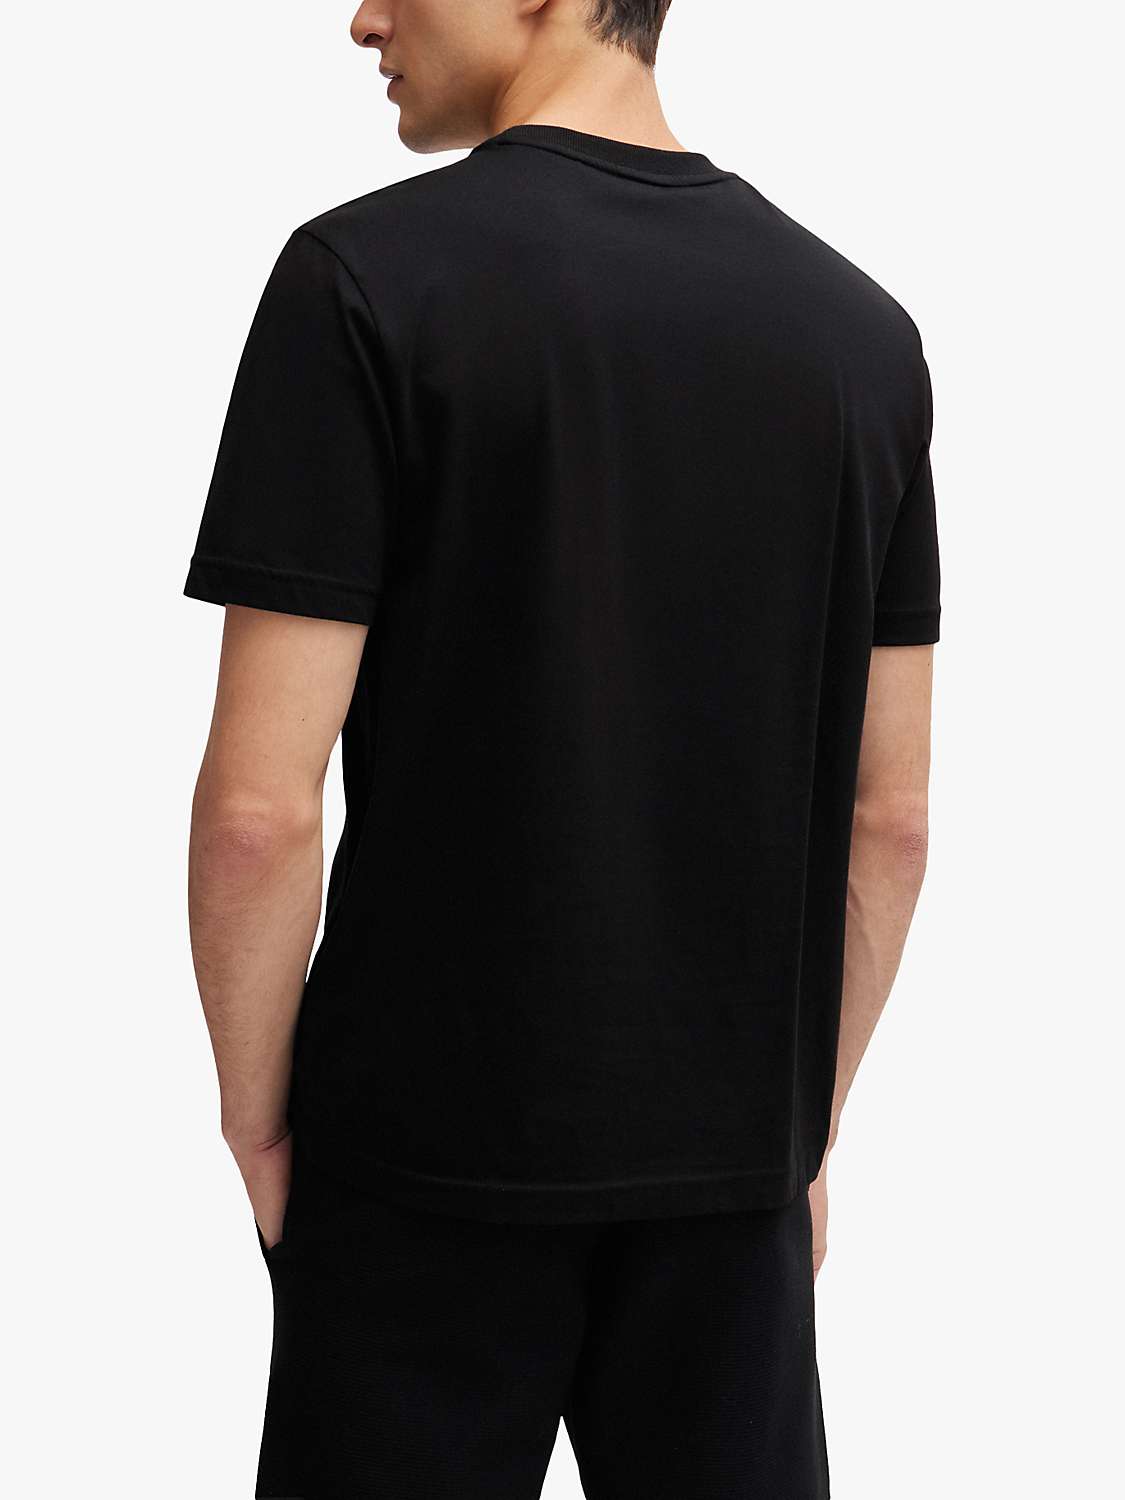 Buy BOSS Tee 001 Cotton T-Shirt, Black Online at johnlewis.com